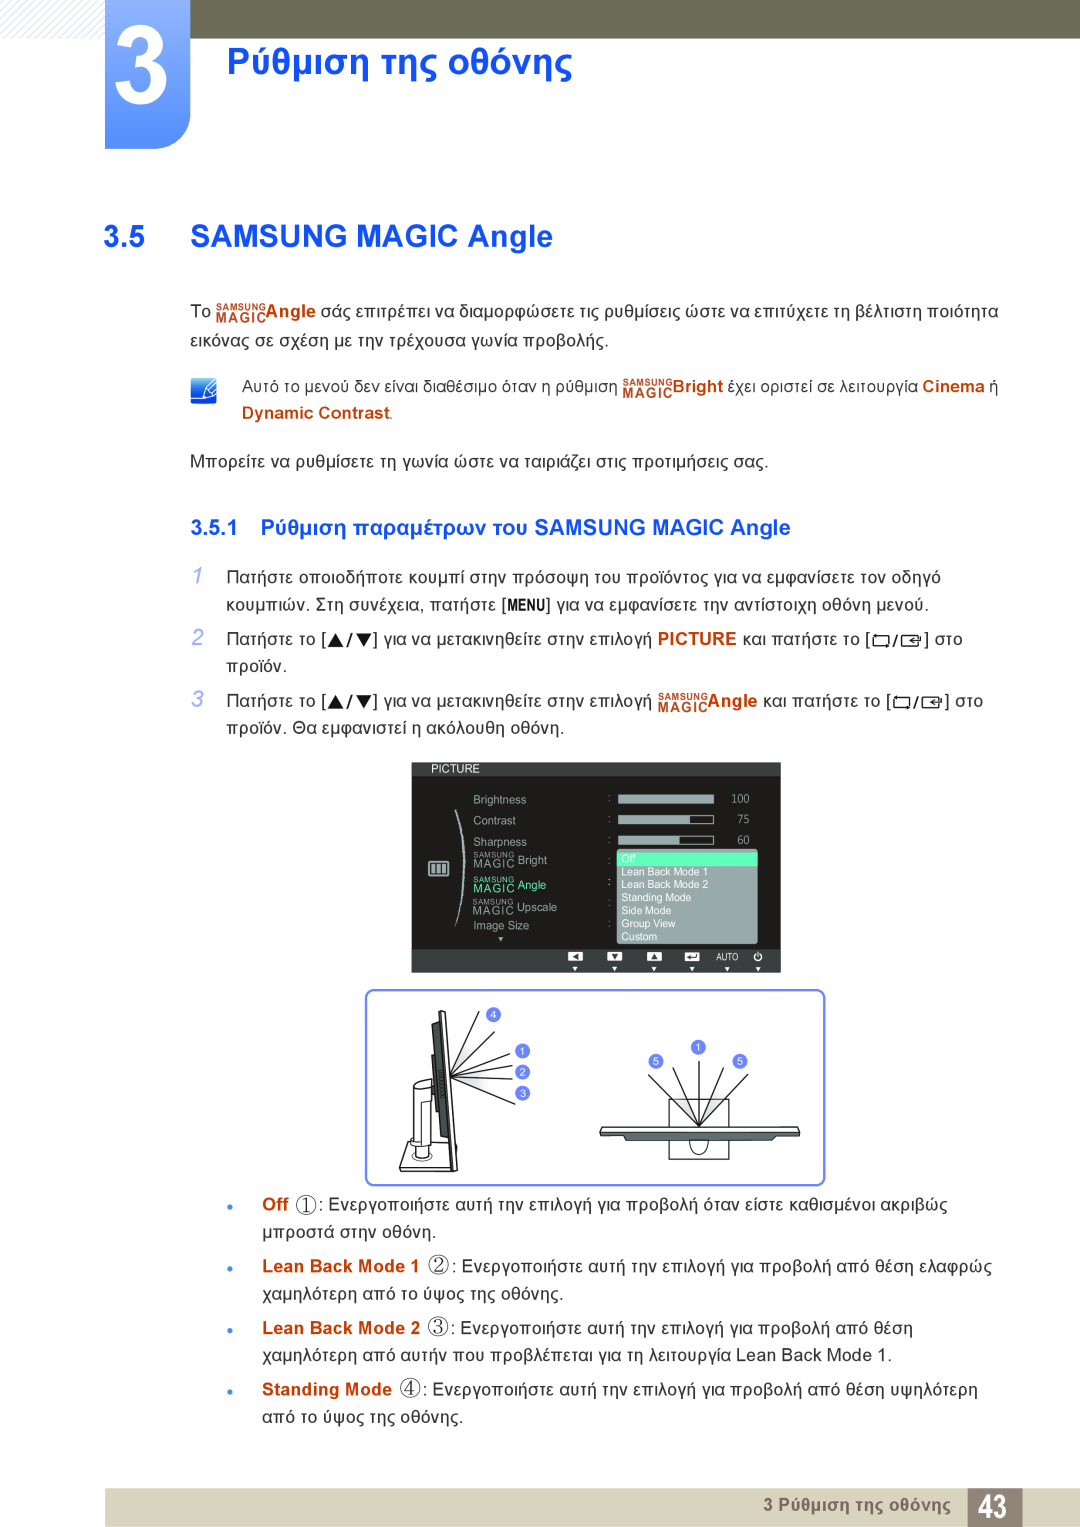 Samsung LS23C45KBS/EN manual 3.5.1 Ρύθμιση παραμέτρων του SAMSUNG MAGIC Angle, 3 Ρύθμιση της οθόνης, Dynamic Contrast 